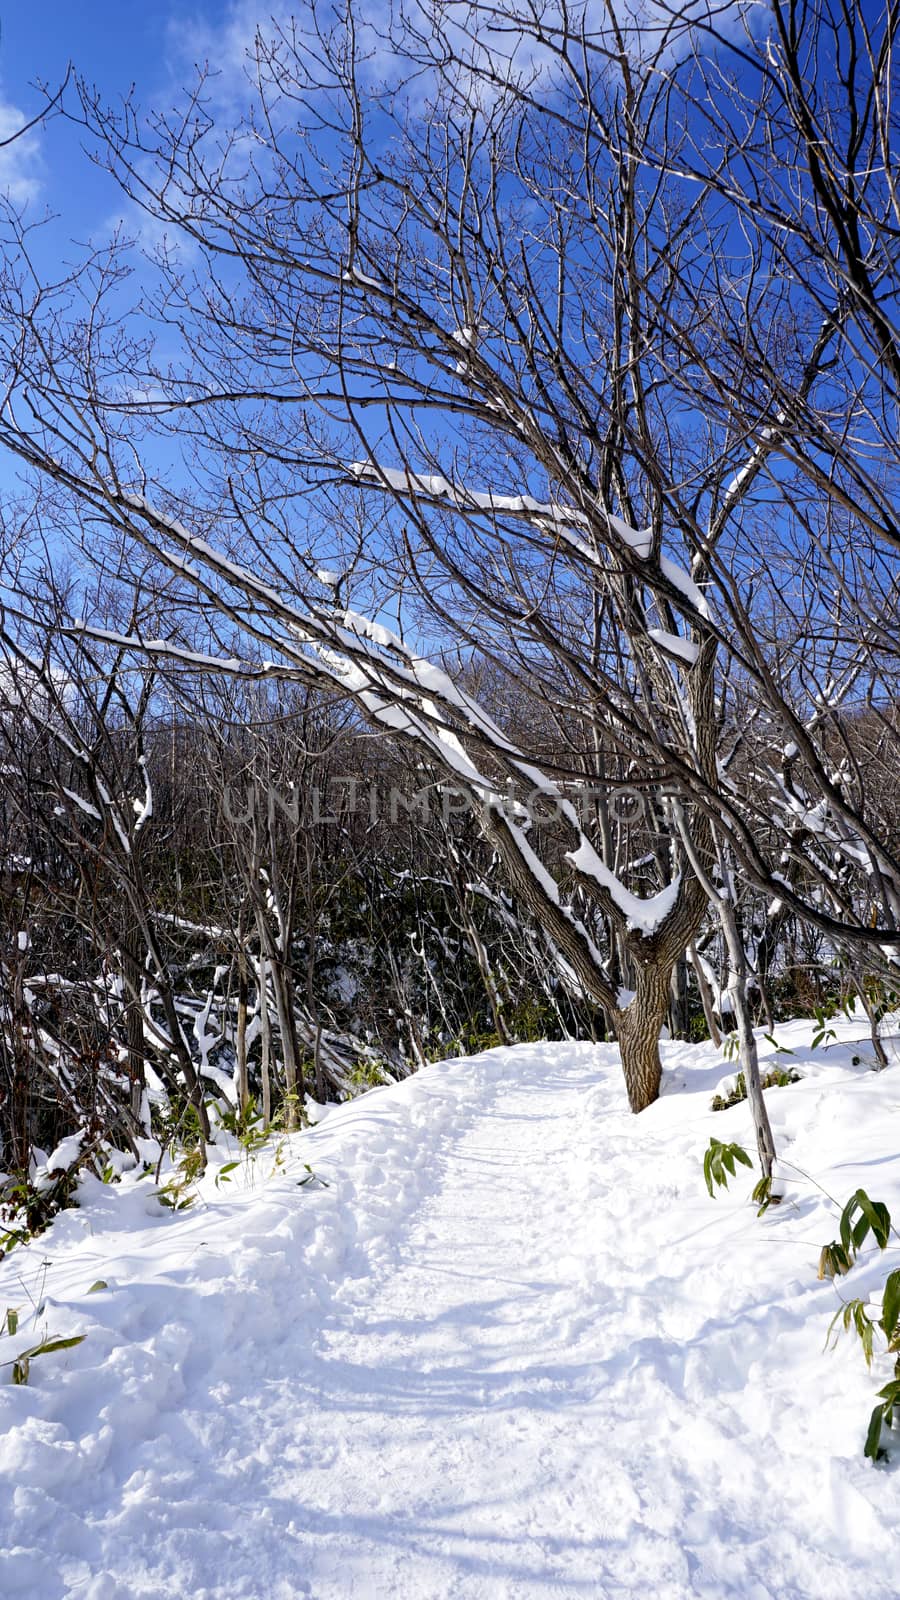 Snow and walkway in the forest Noboribetsu onsen snow winter national park in Jigokudani, Hokkaido, Japan